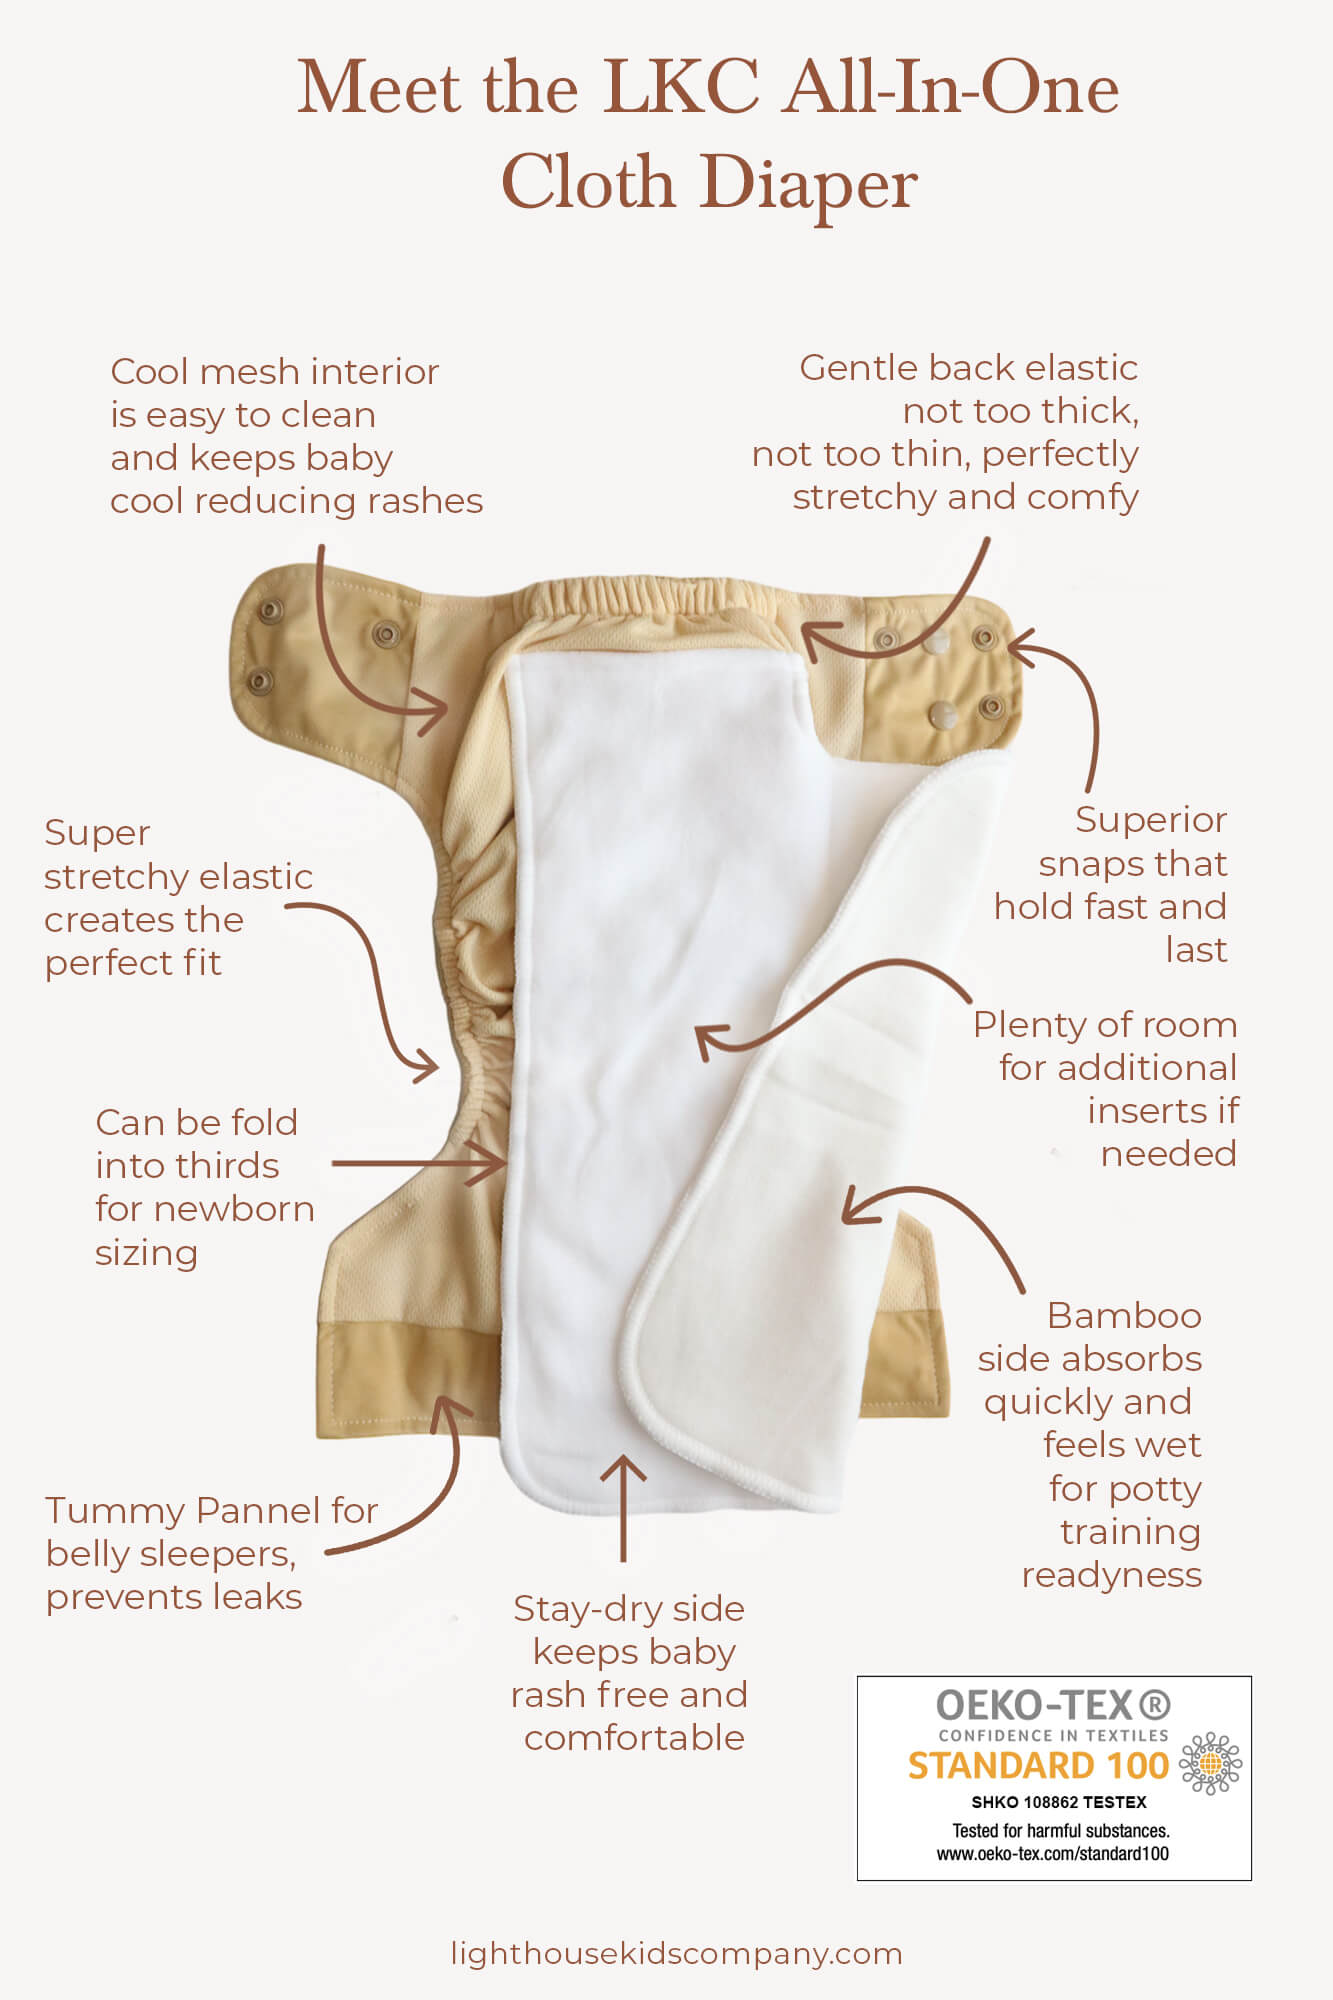 All-In-One Cloth Diaper